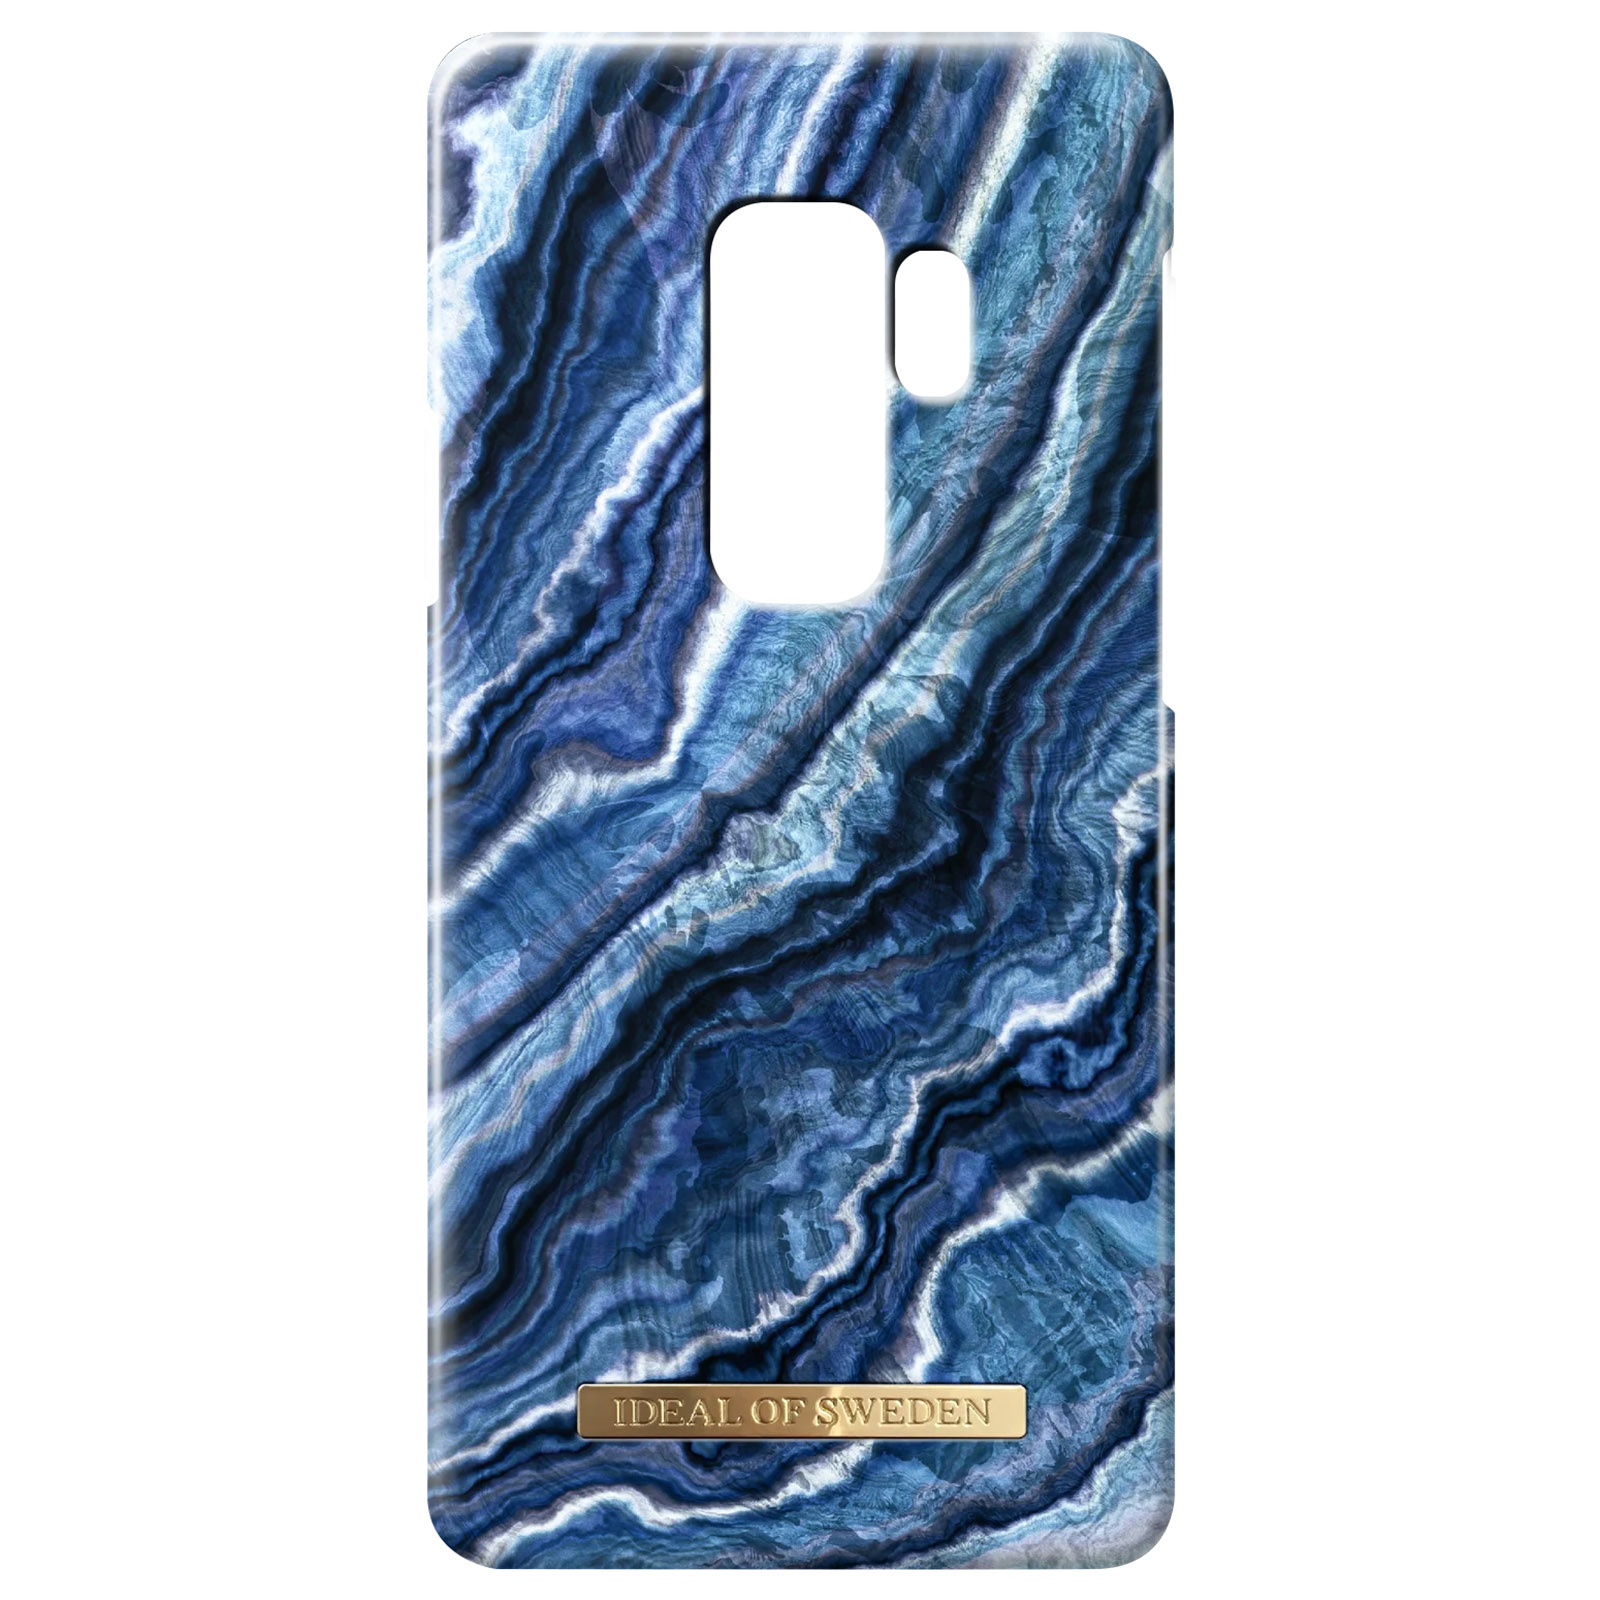 IDEAL OF SWEDEN Blau Galaxy Backcover, S9, Indigo Series, Swirl Samsung